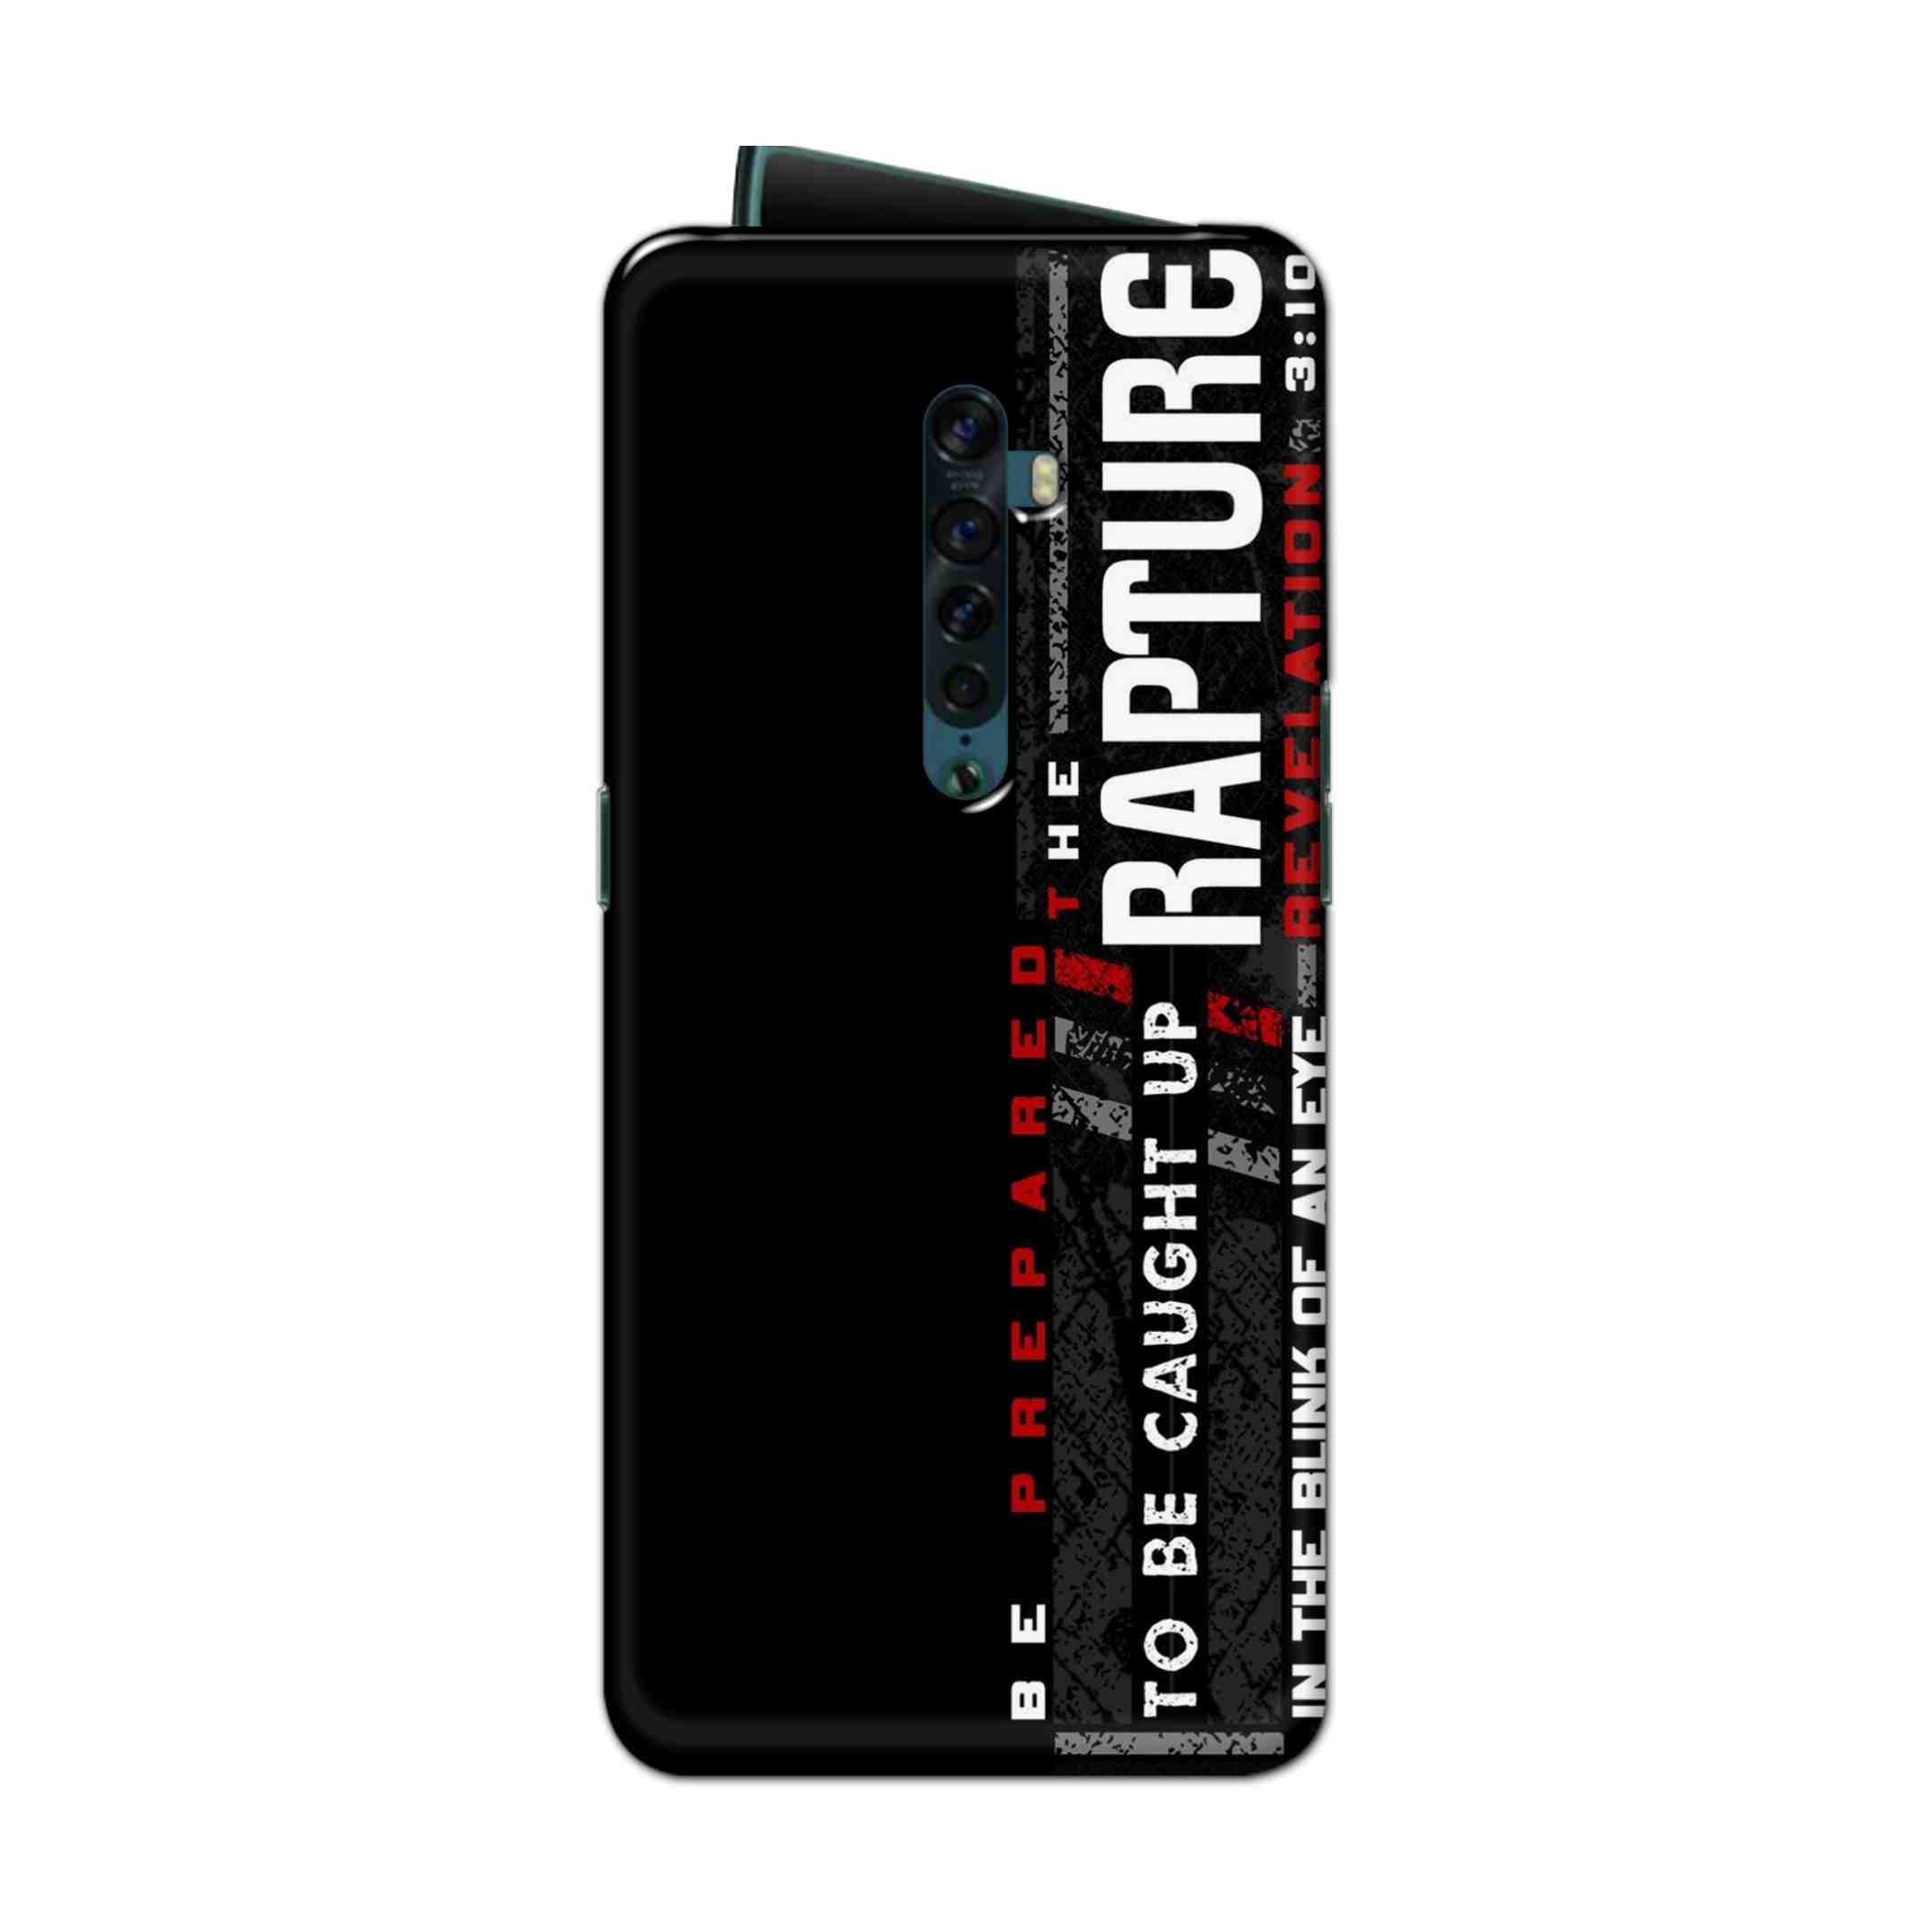 Buy Rapture Hard Back Mobile Phone Case Cover For Oppo Reno 2 Online